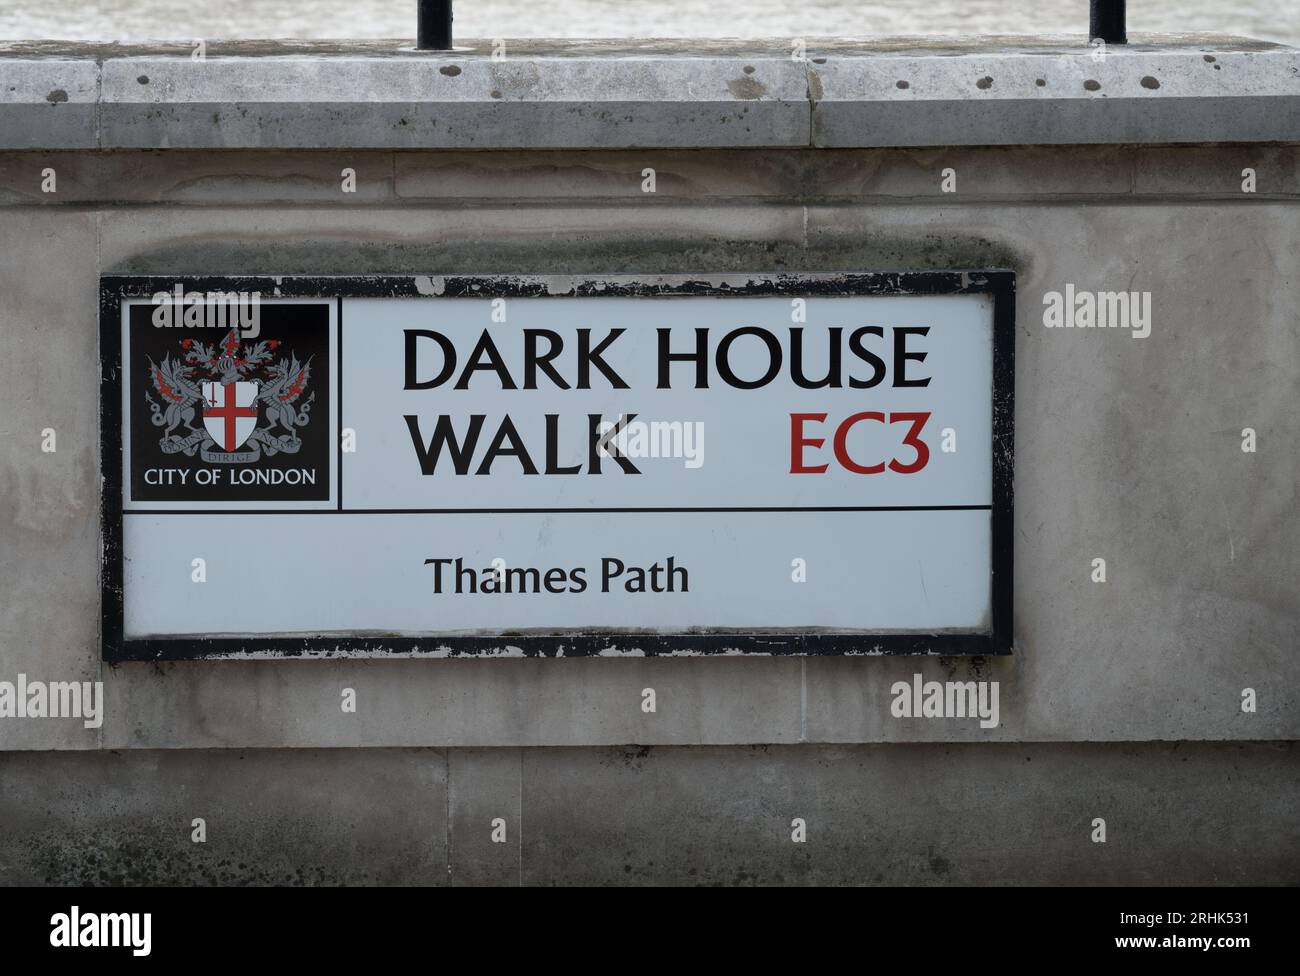 Thames Path walkway name sign on Thames riverside wall for Dark House Walk. London, England, UK Stock Photo